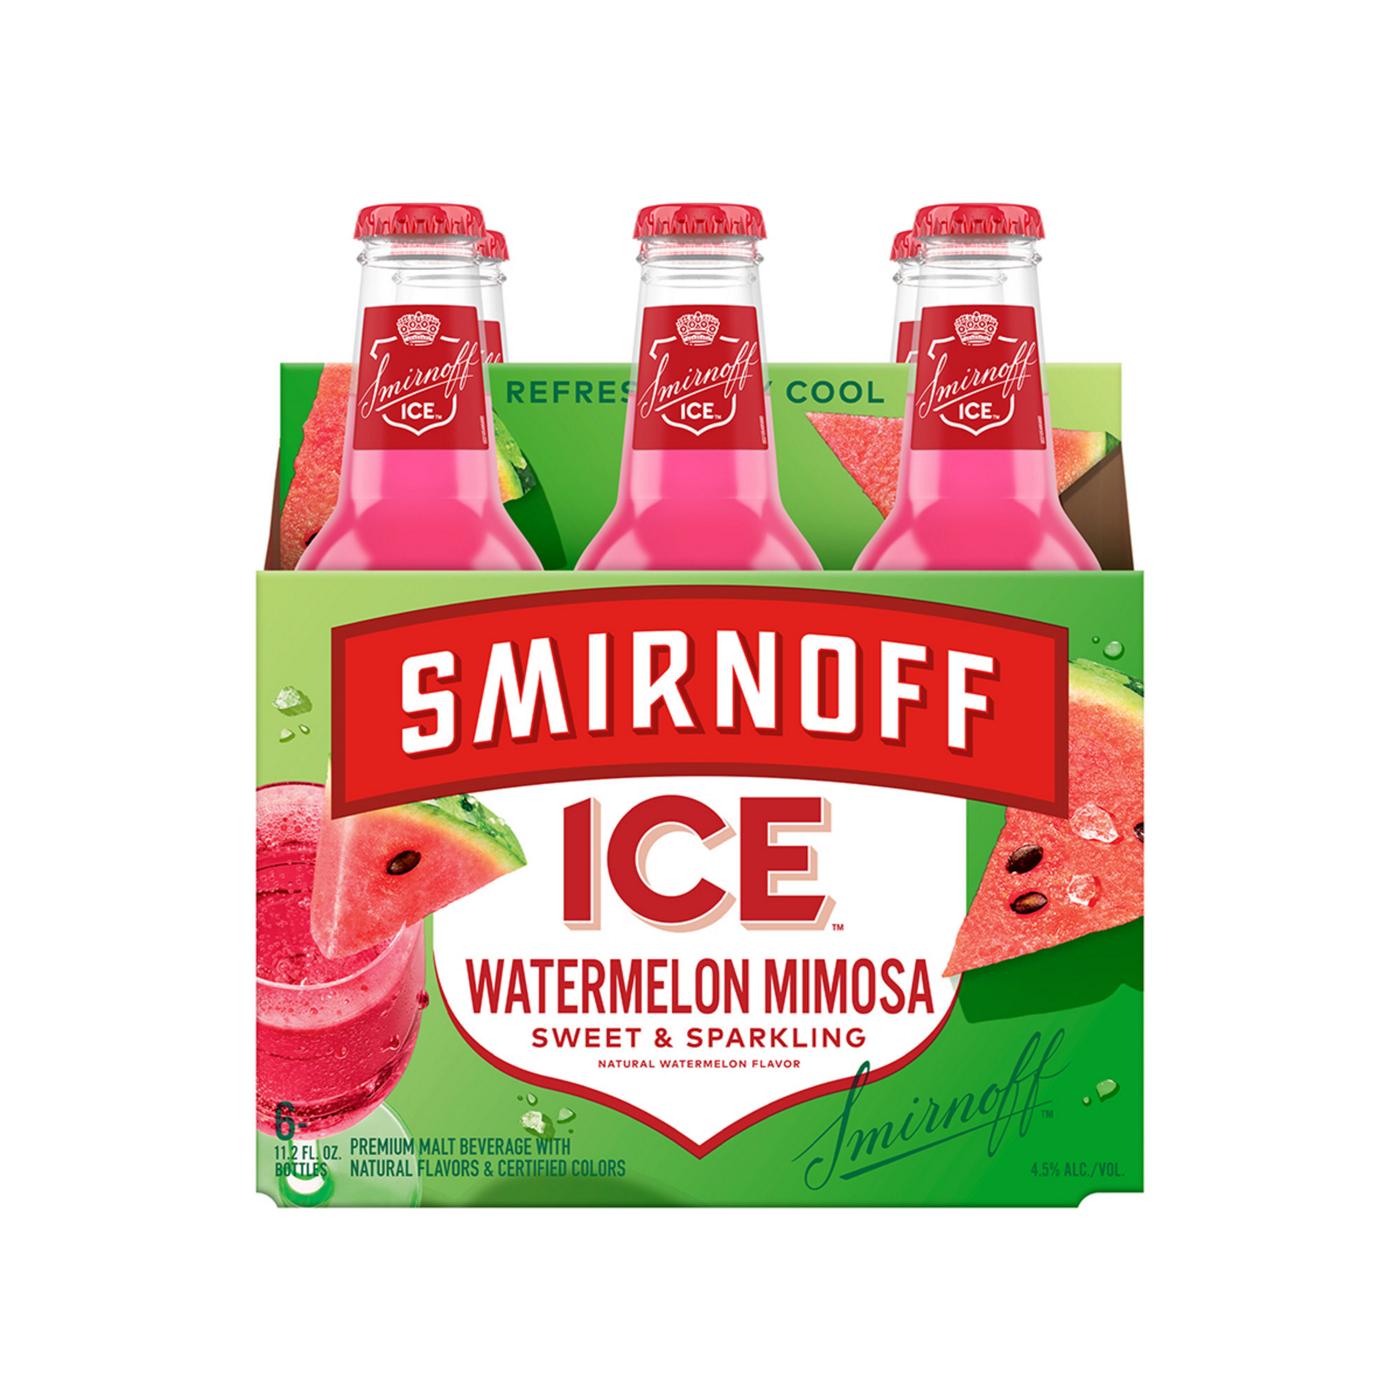 Smirnoff Ice Watermelon Mimosa; image 1 of 5